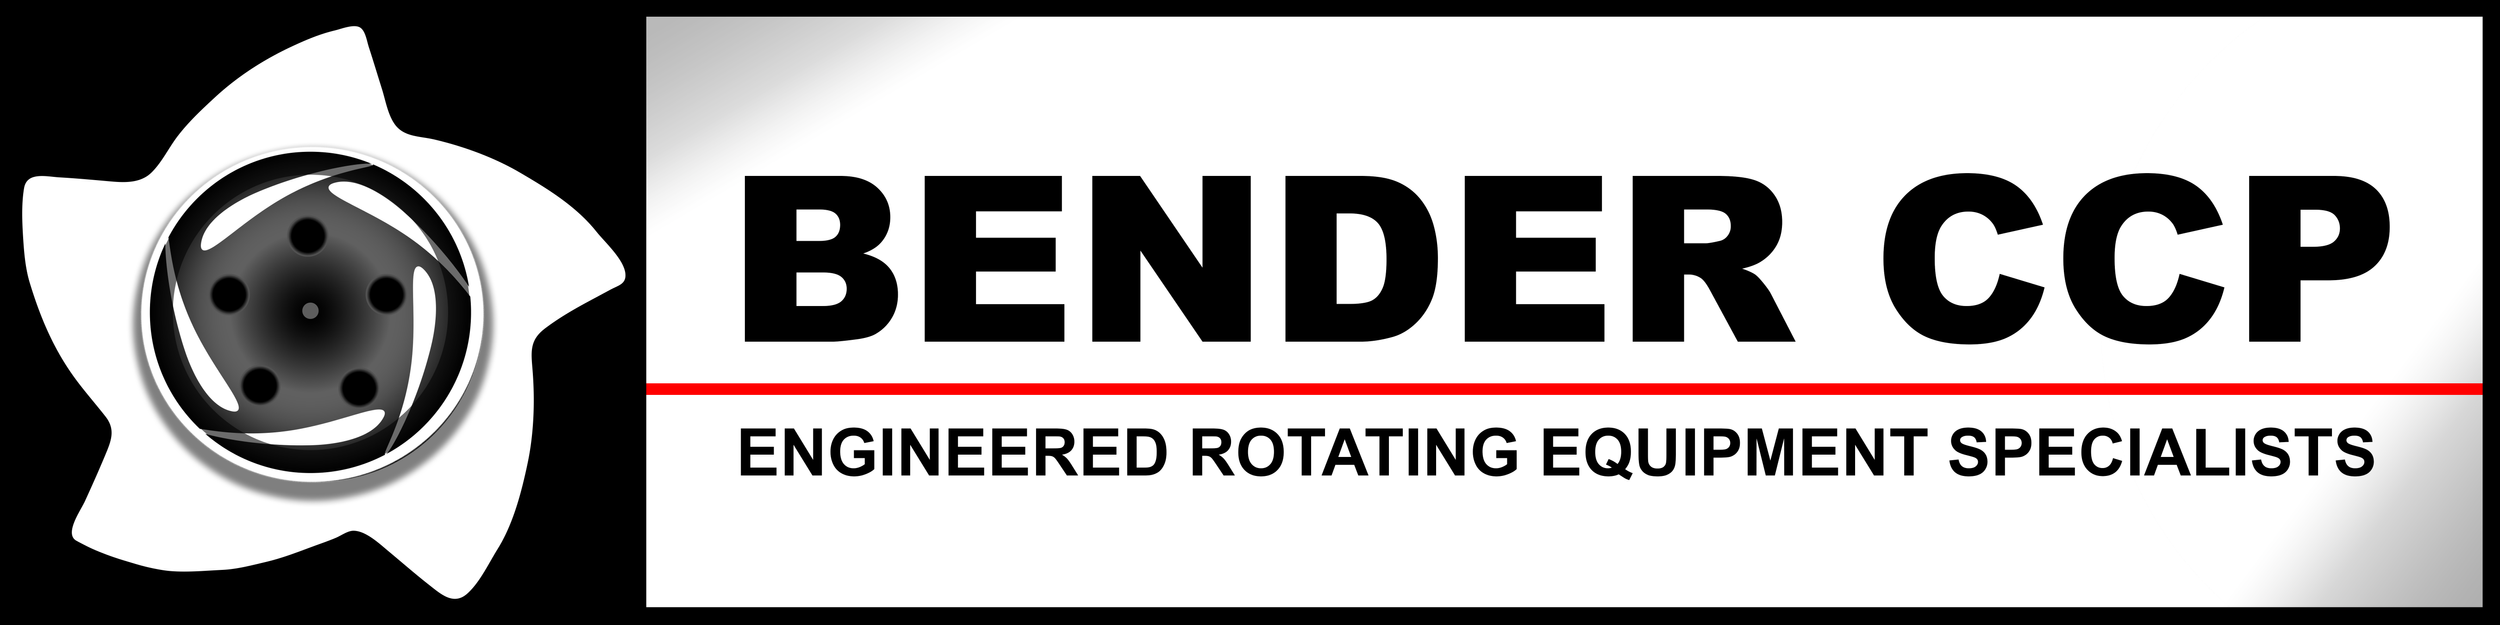 Bender CCP 36 x 9 Logo Full Detail.png